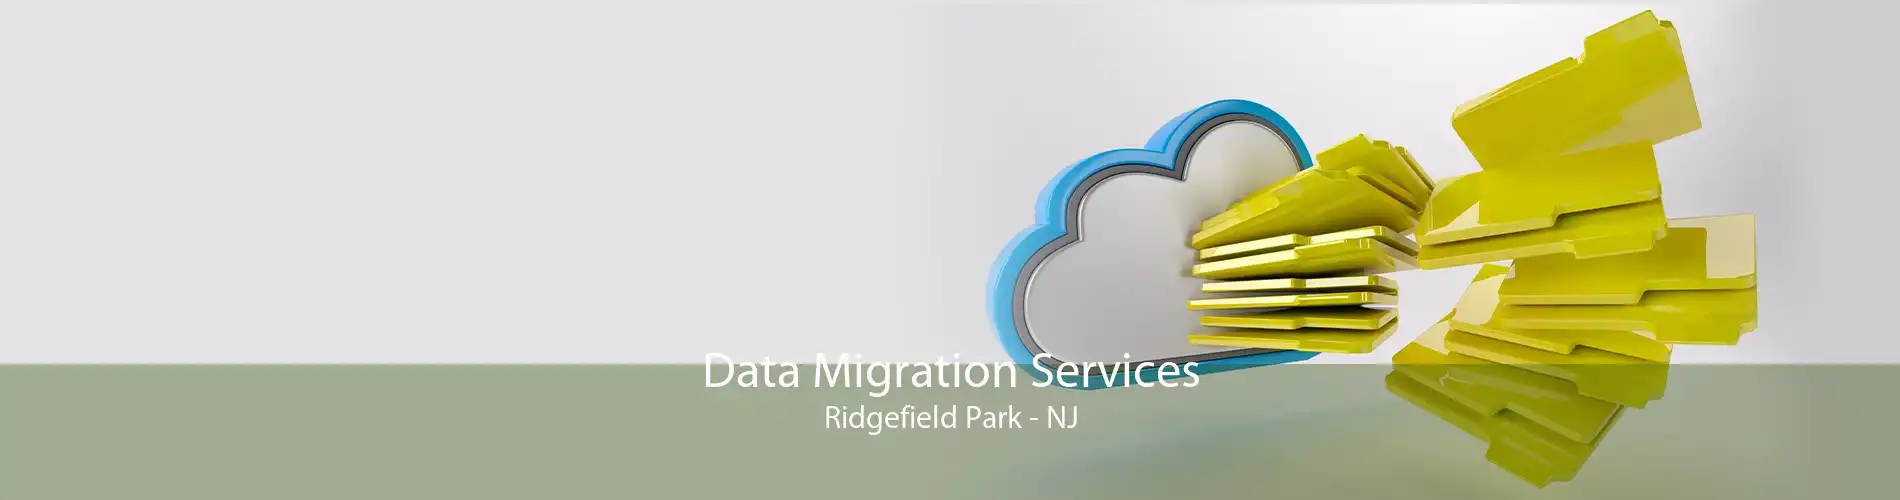 Data Migration Services Ridgefield Park - NJ